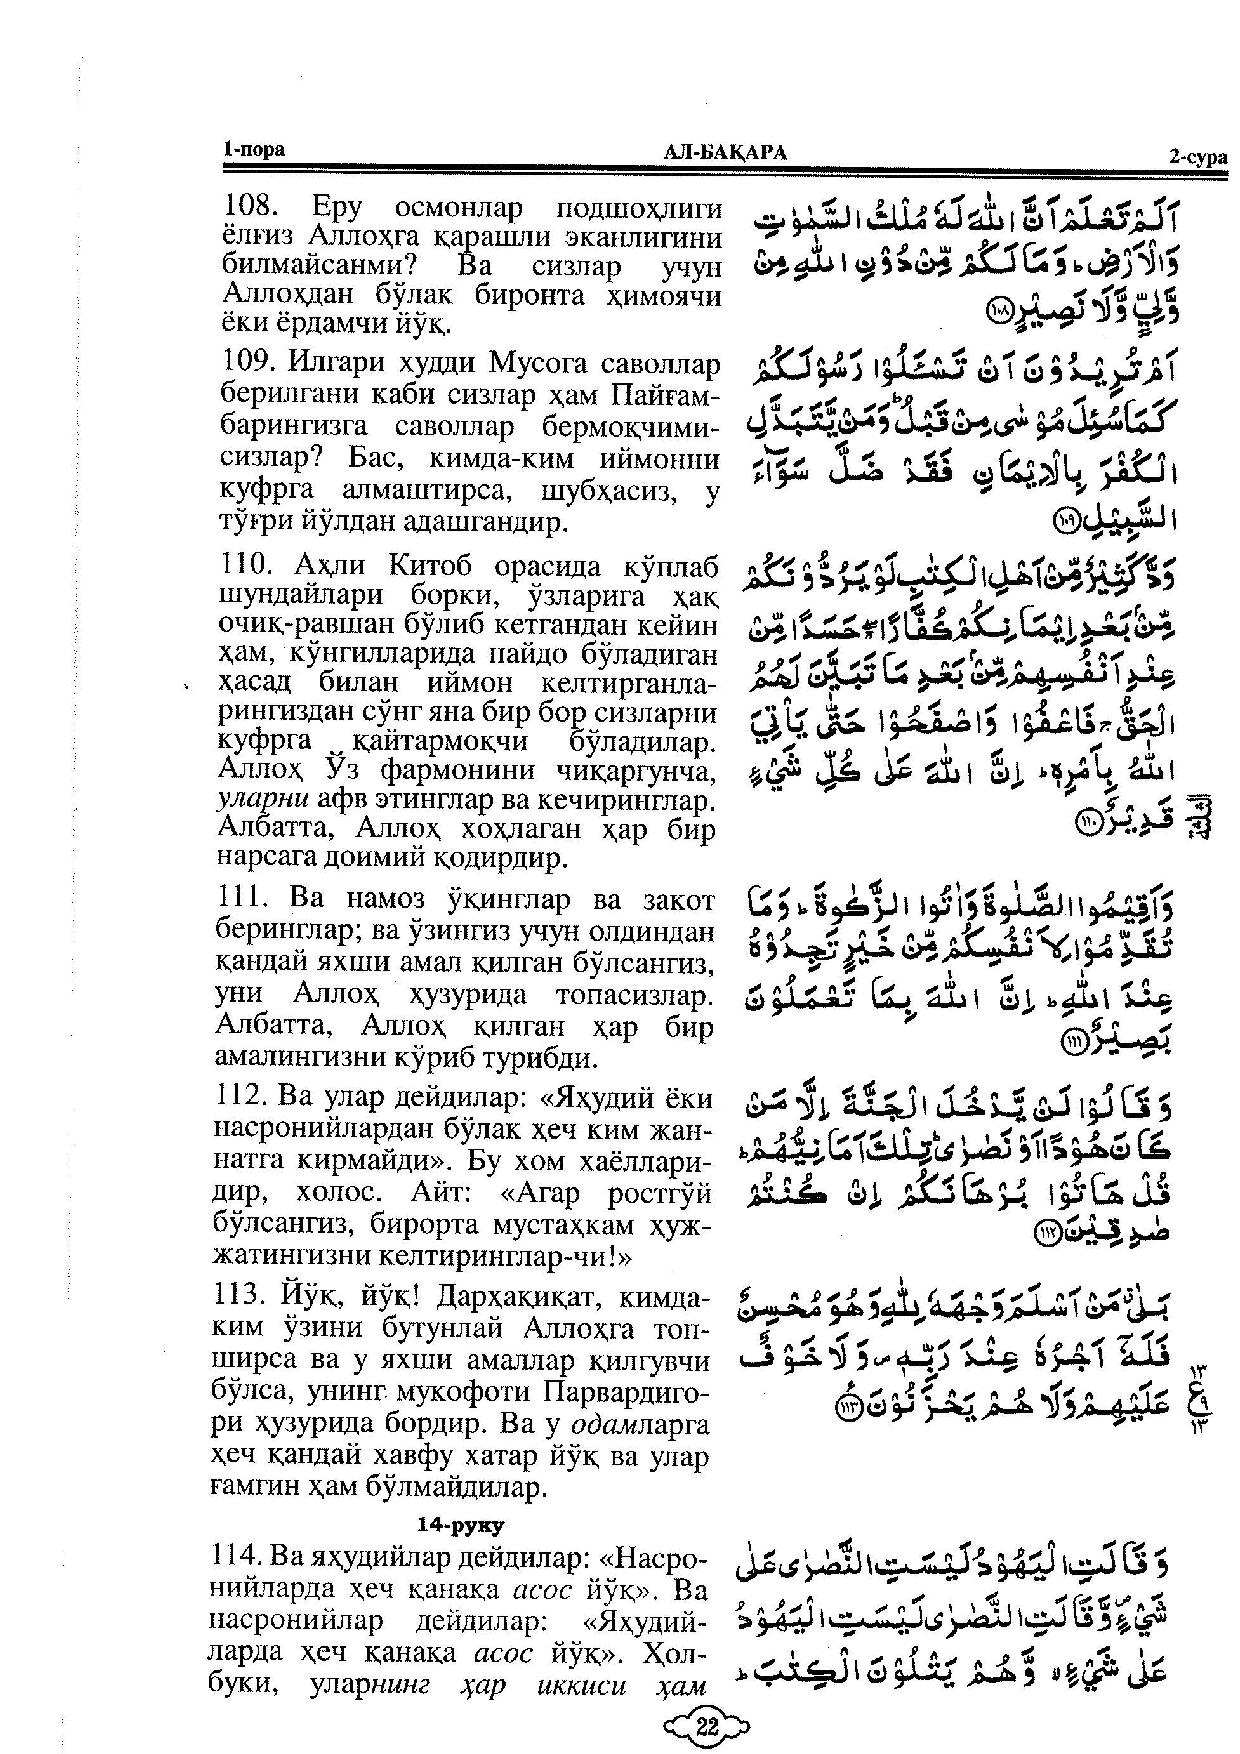 002-al-baqarah-page-020